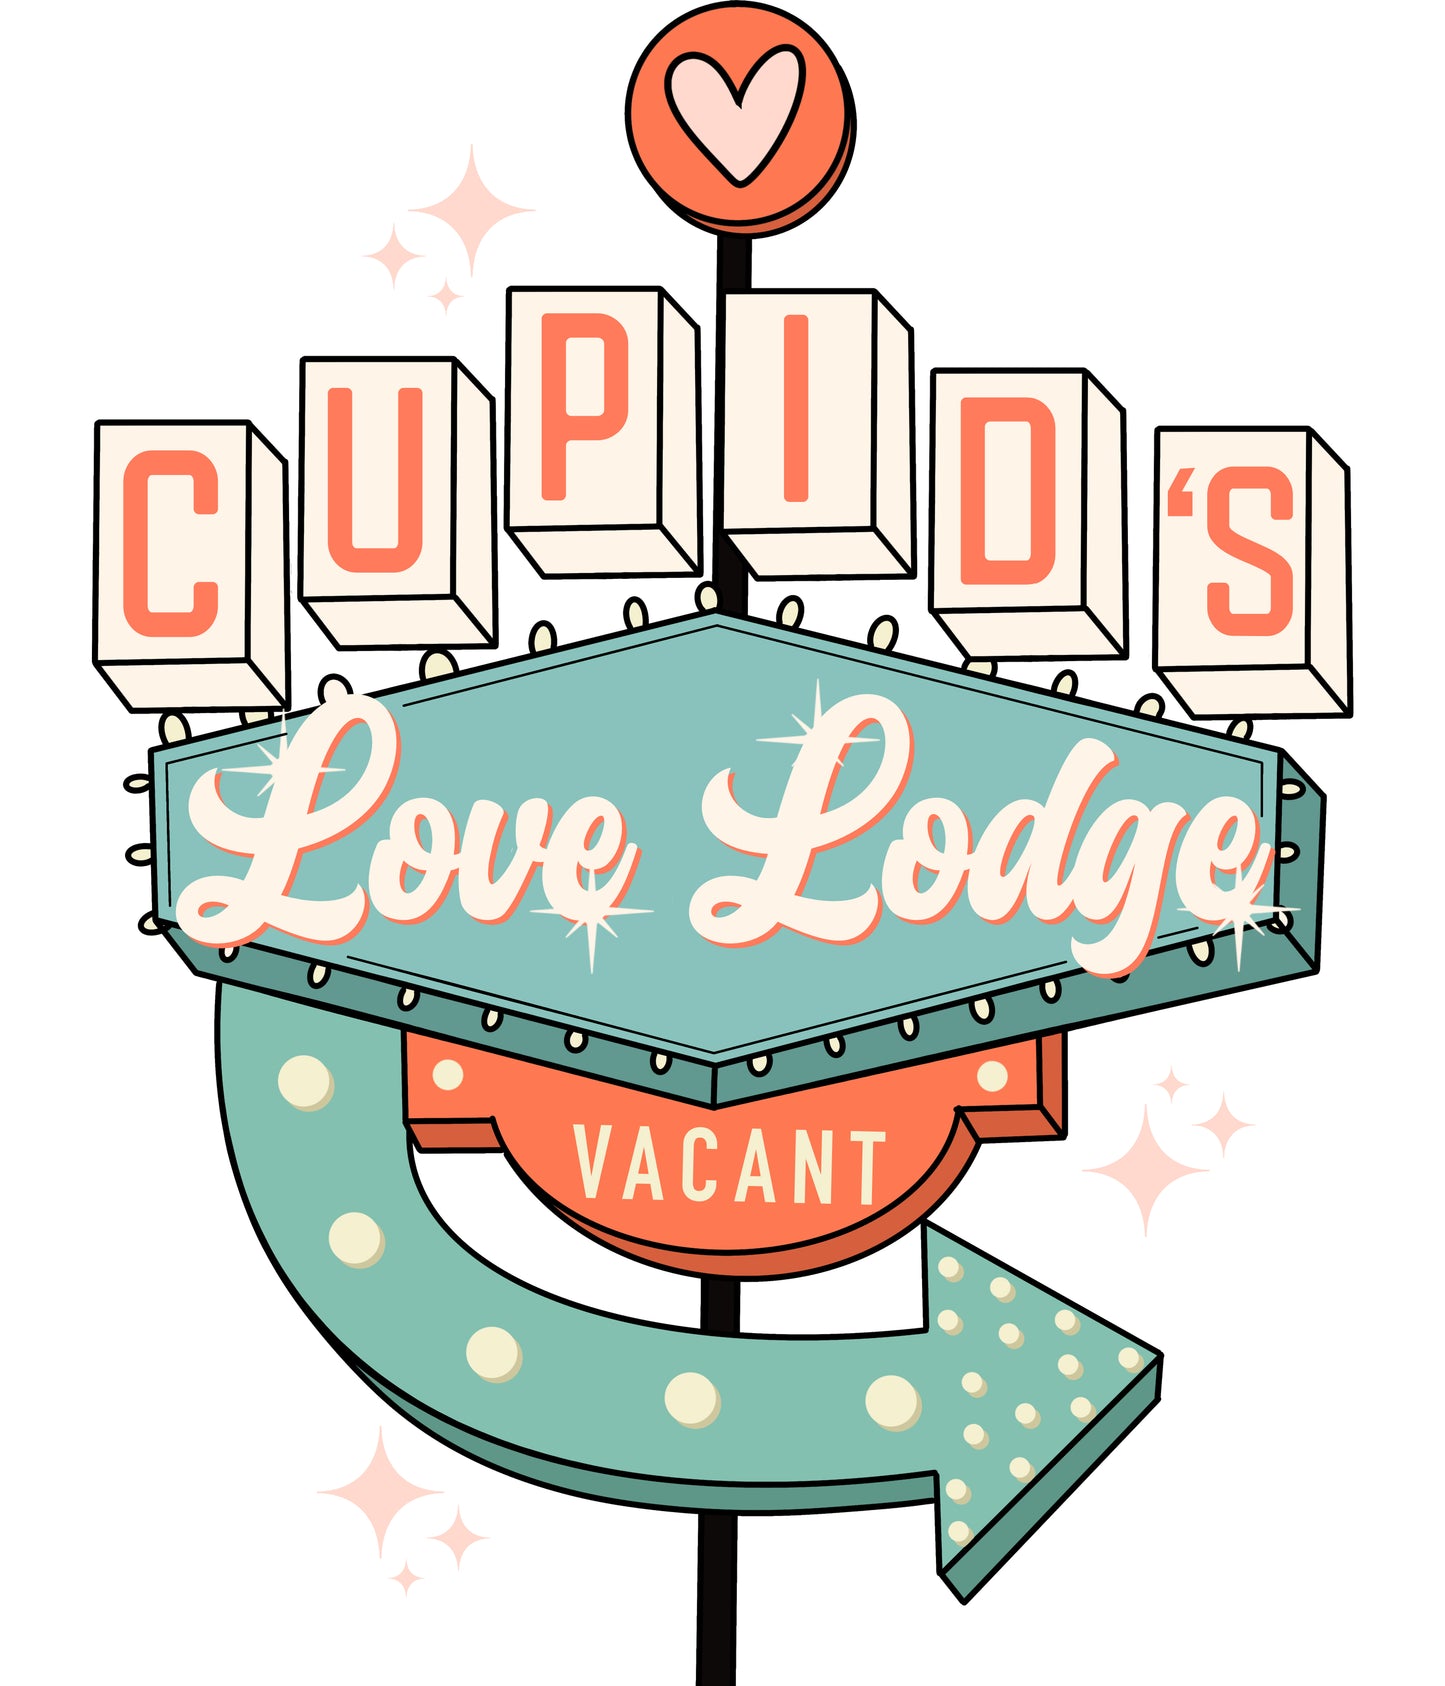 Cupid's Love Lodge